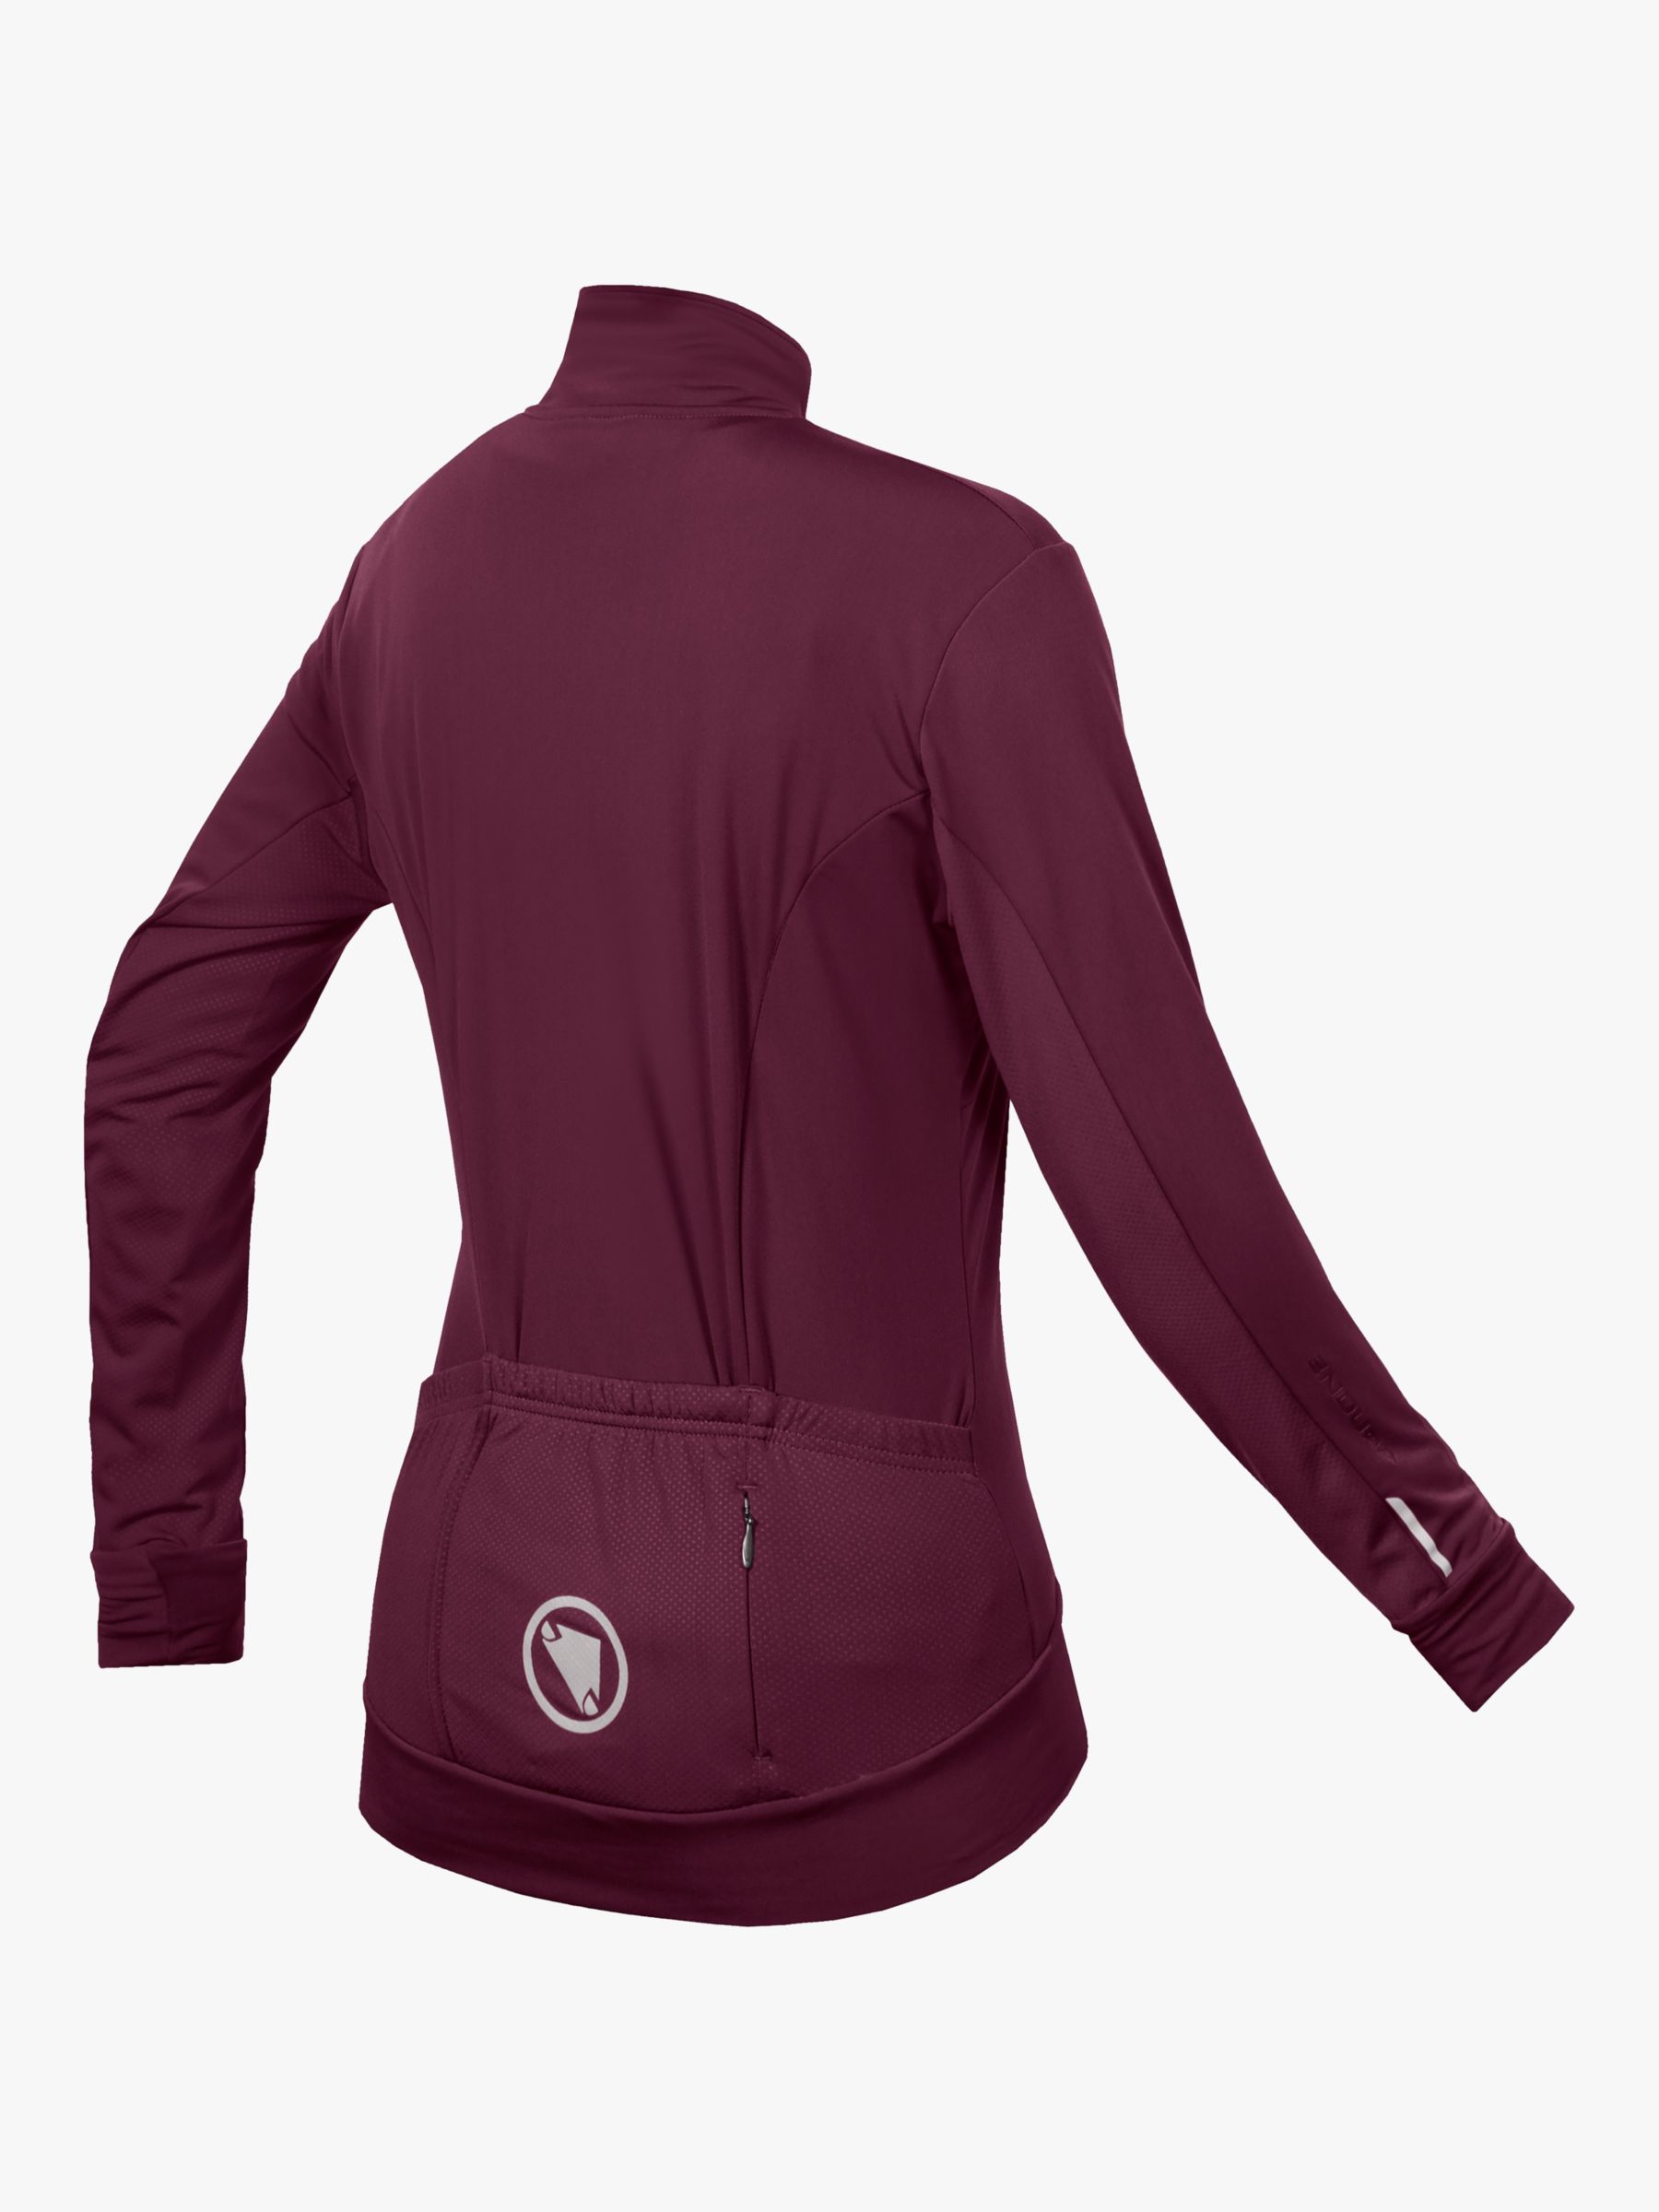 Buy Endura Women's Xtract Roubaix Long Sleeve Jersey Online at johnlewis.com